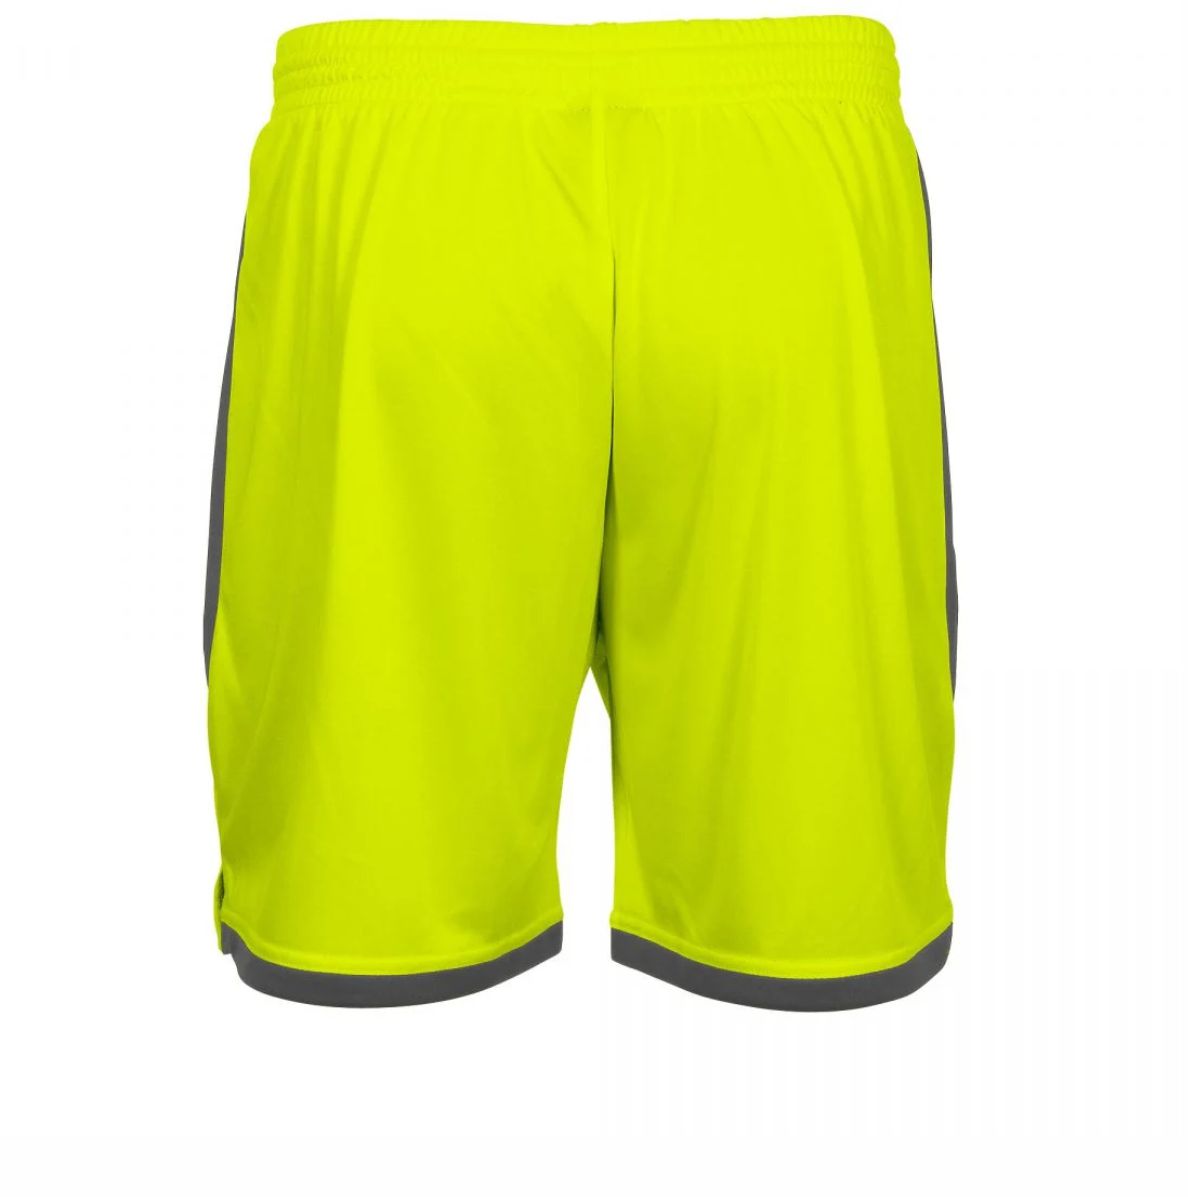 Stanno - Focus Shorts - Fluo Yellow & Black